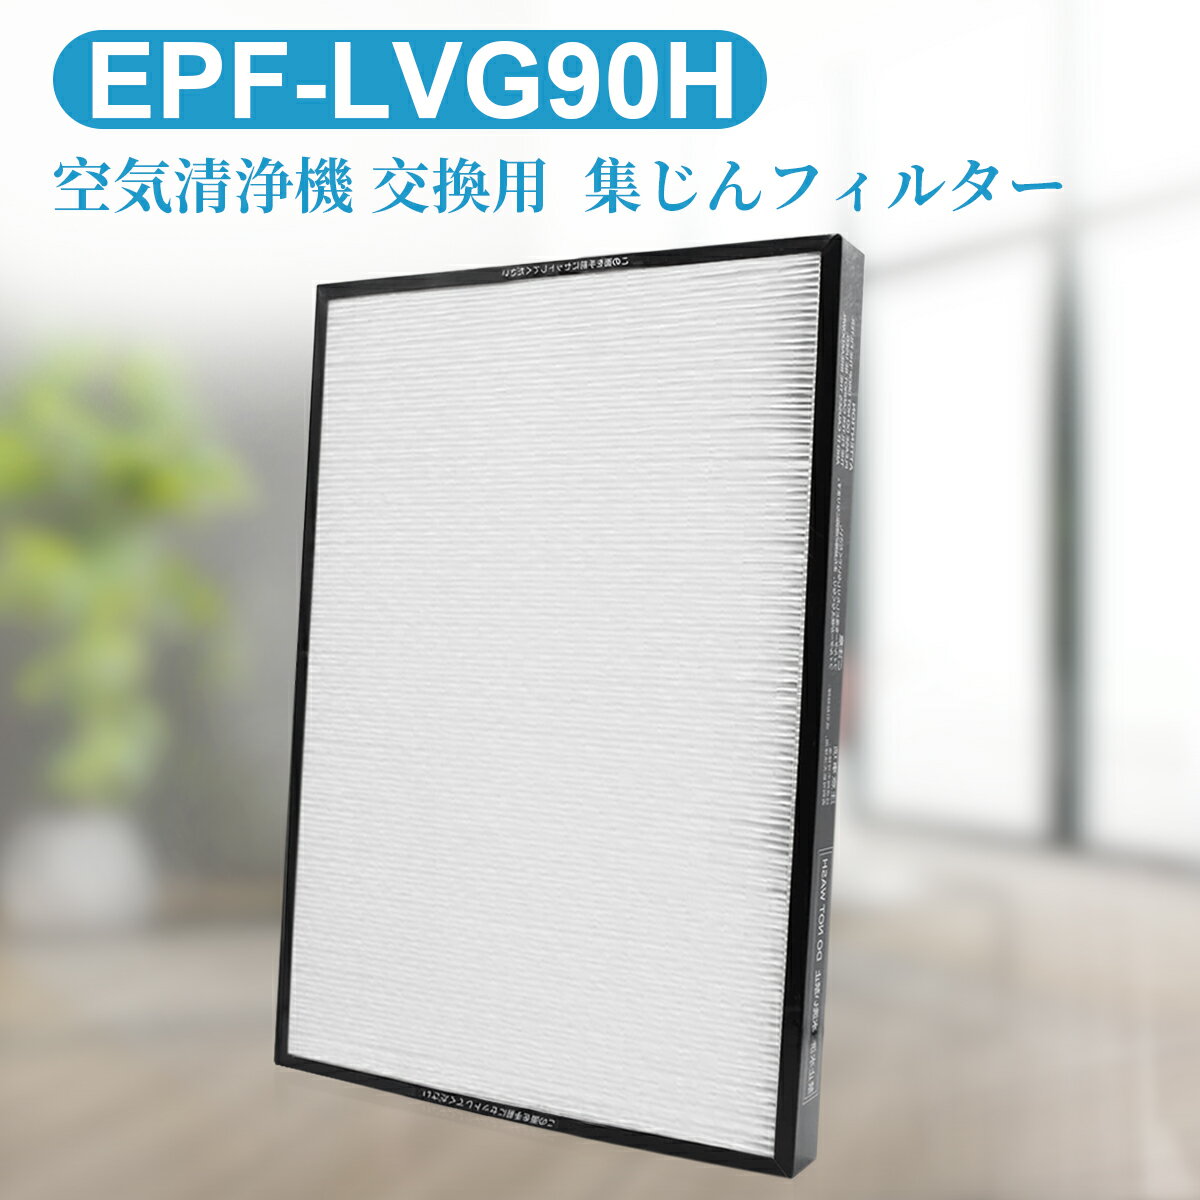 EPF-LVG90H 集じんフィルター epf-lvg90h 